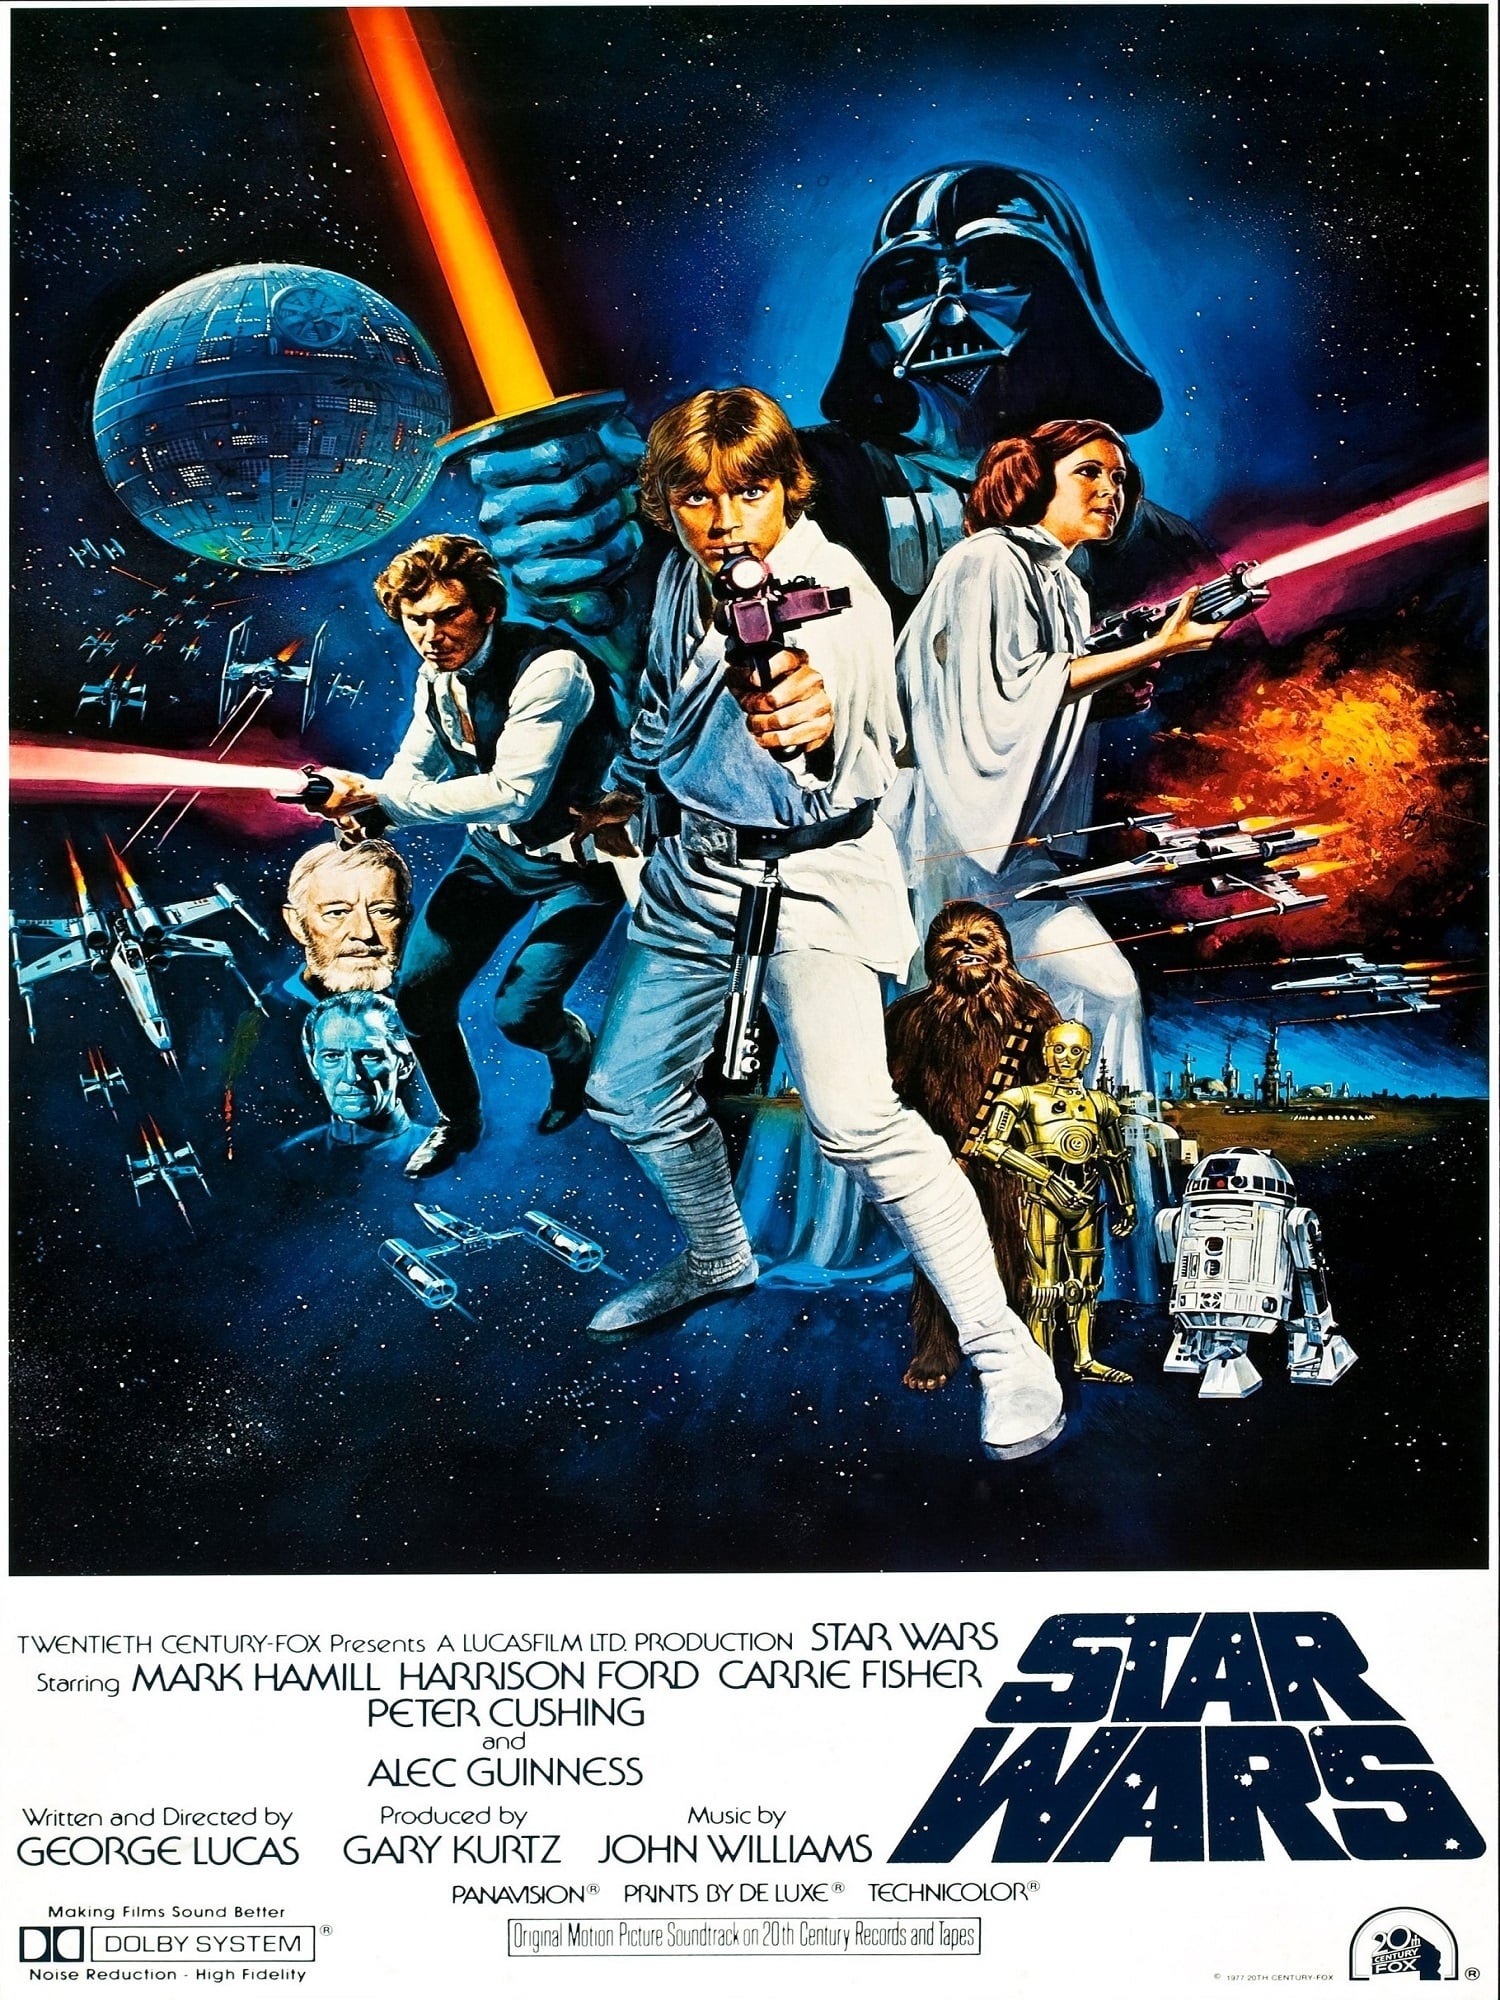 Star Wars: Episode IV - A New Hope (1977):